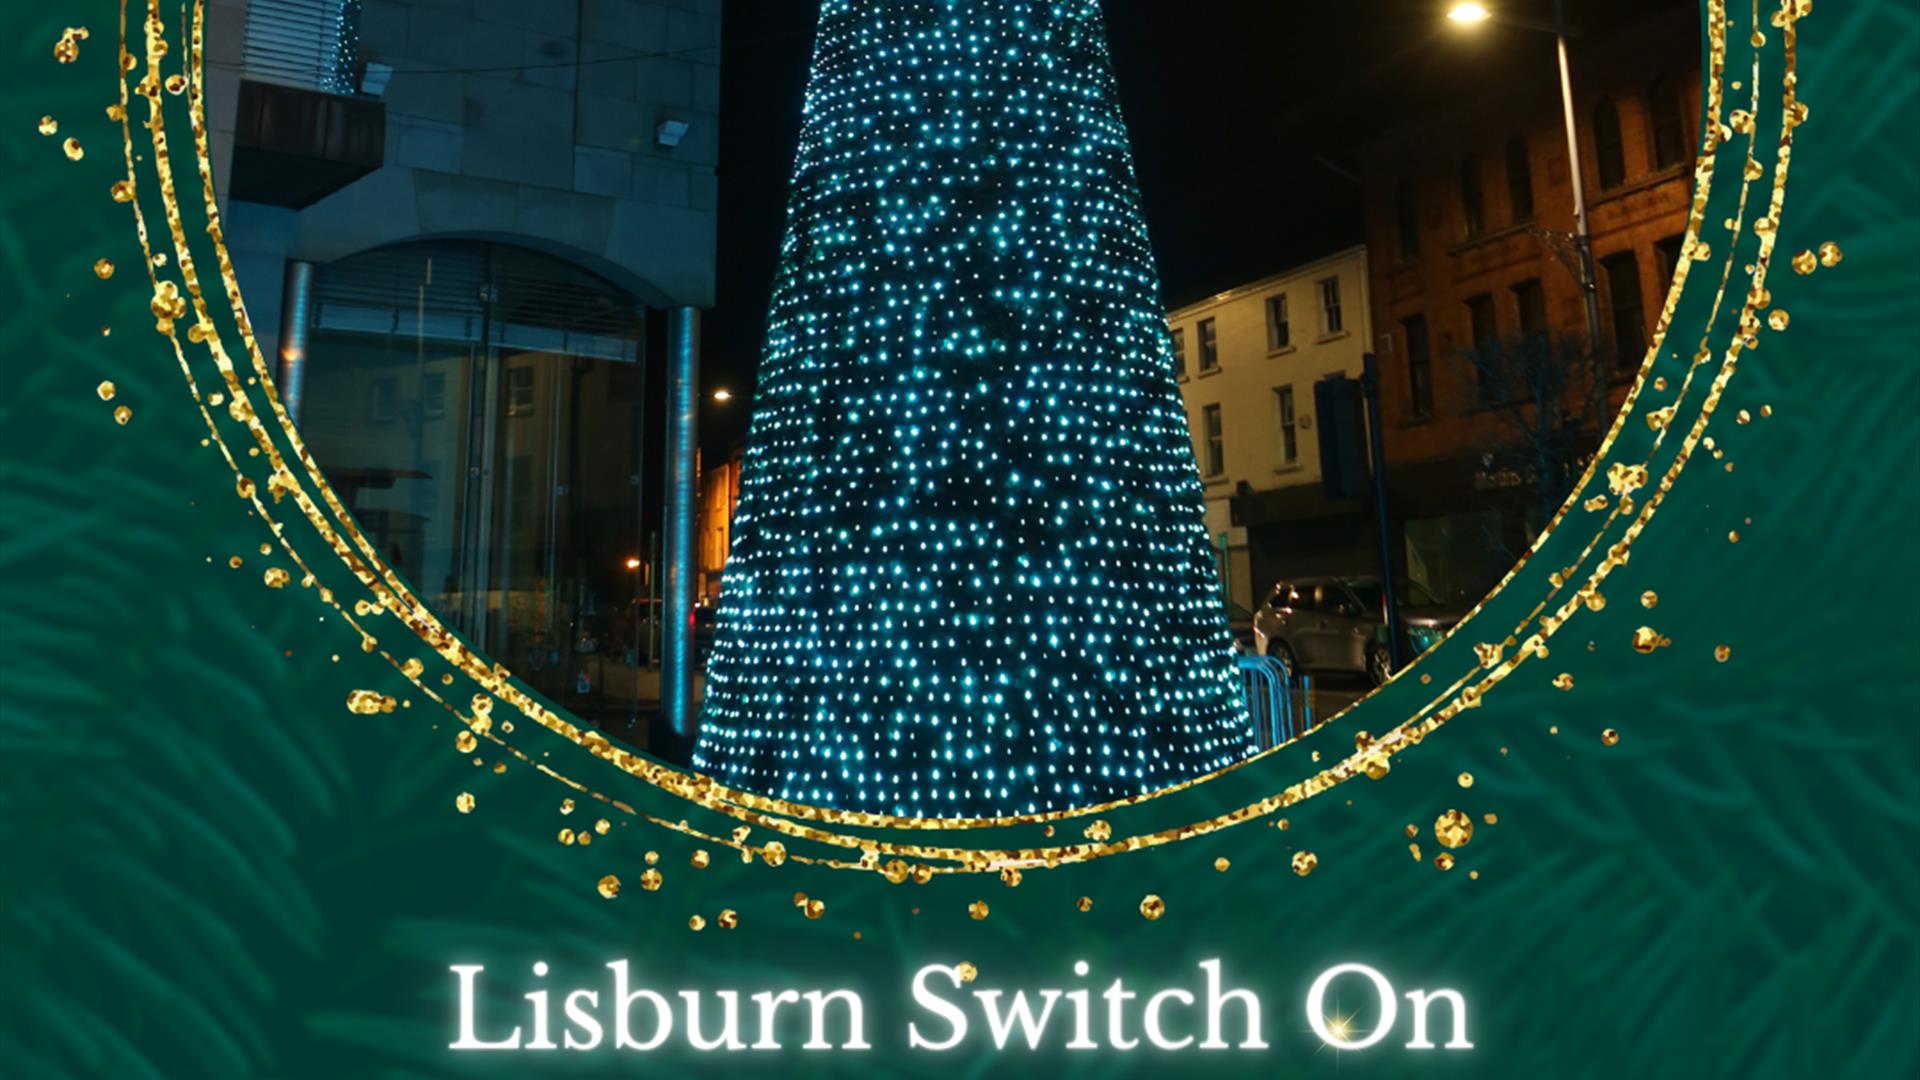 Image is of a LED Christmas Tree outside Market Square, Lisburn